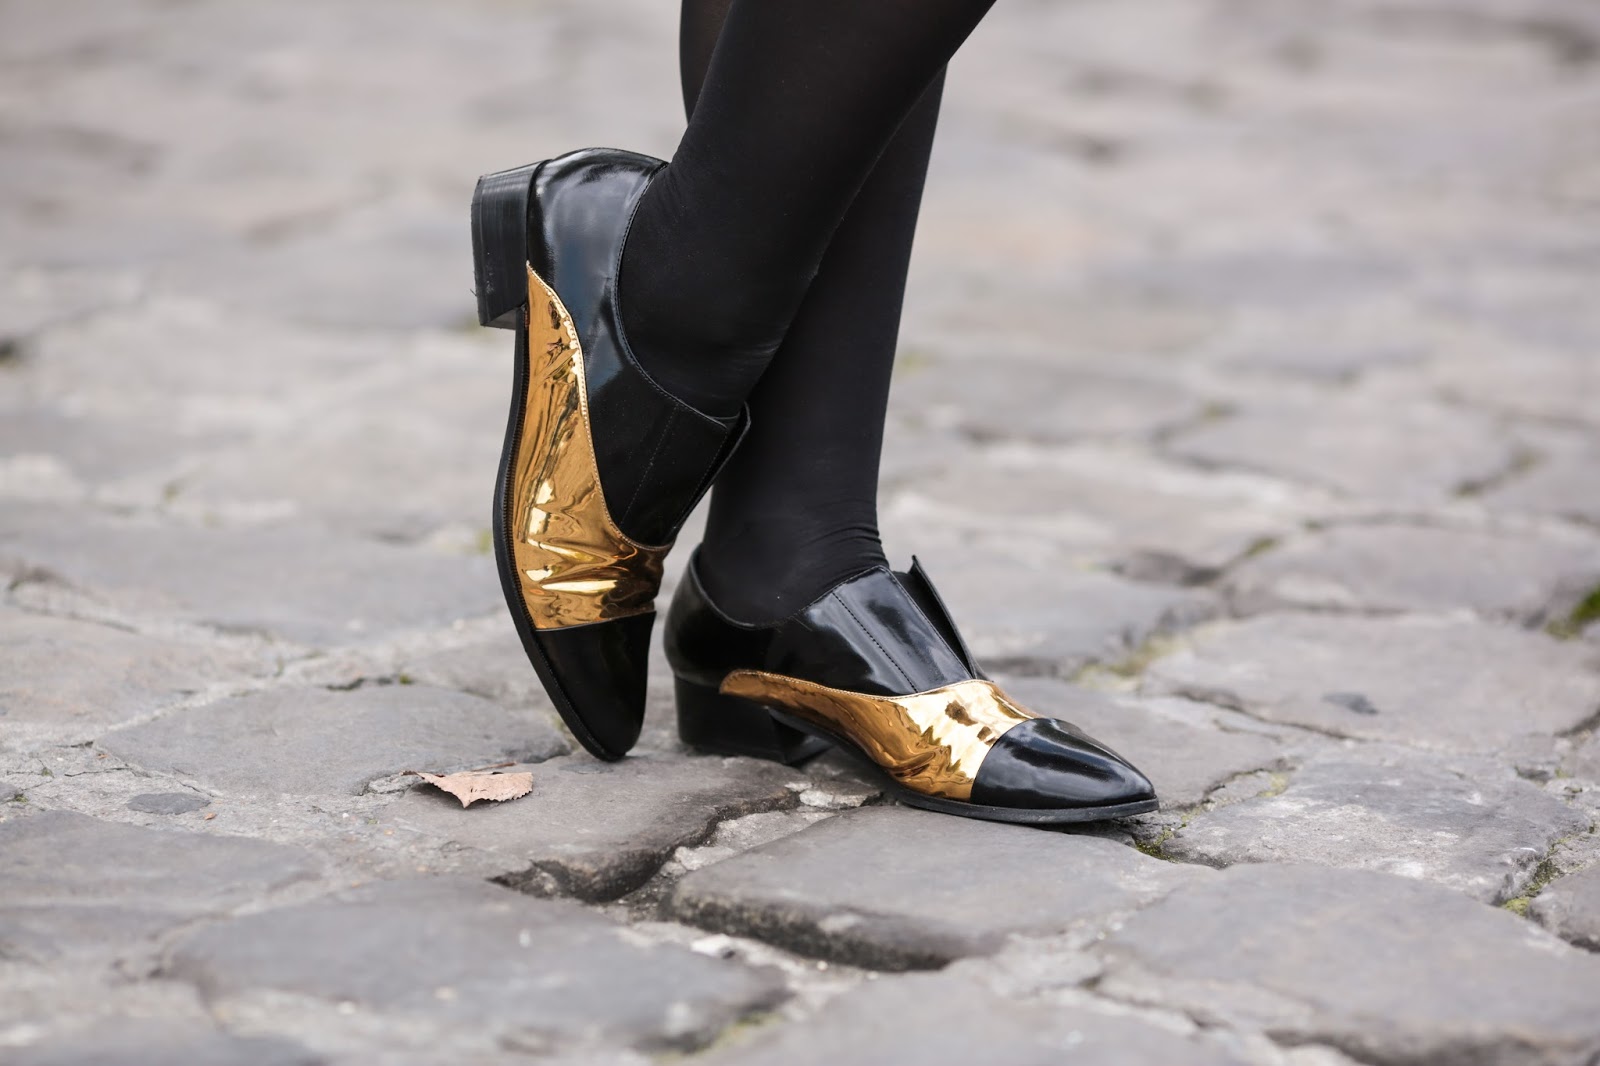 Blogger, Meet me in paree, Style, Look, Fashion, Streetstyle, Parisian style